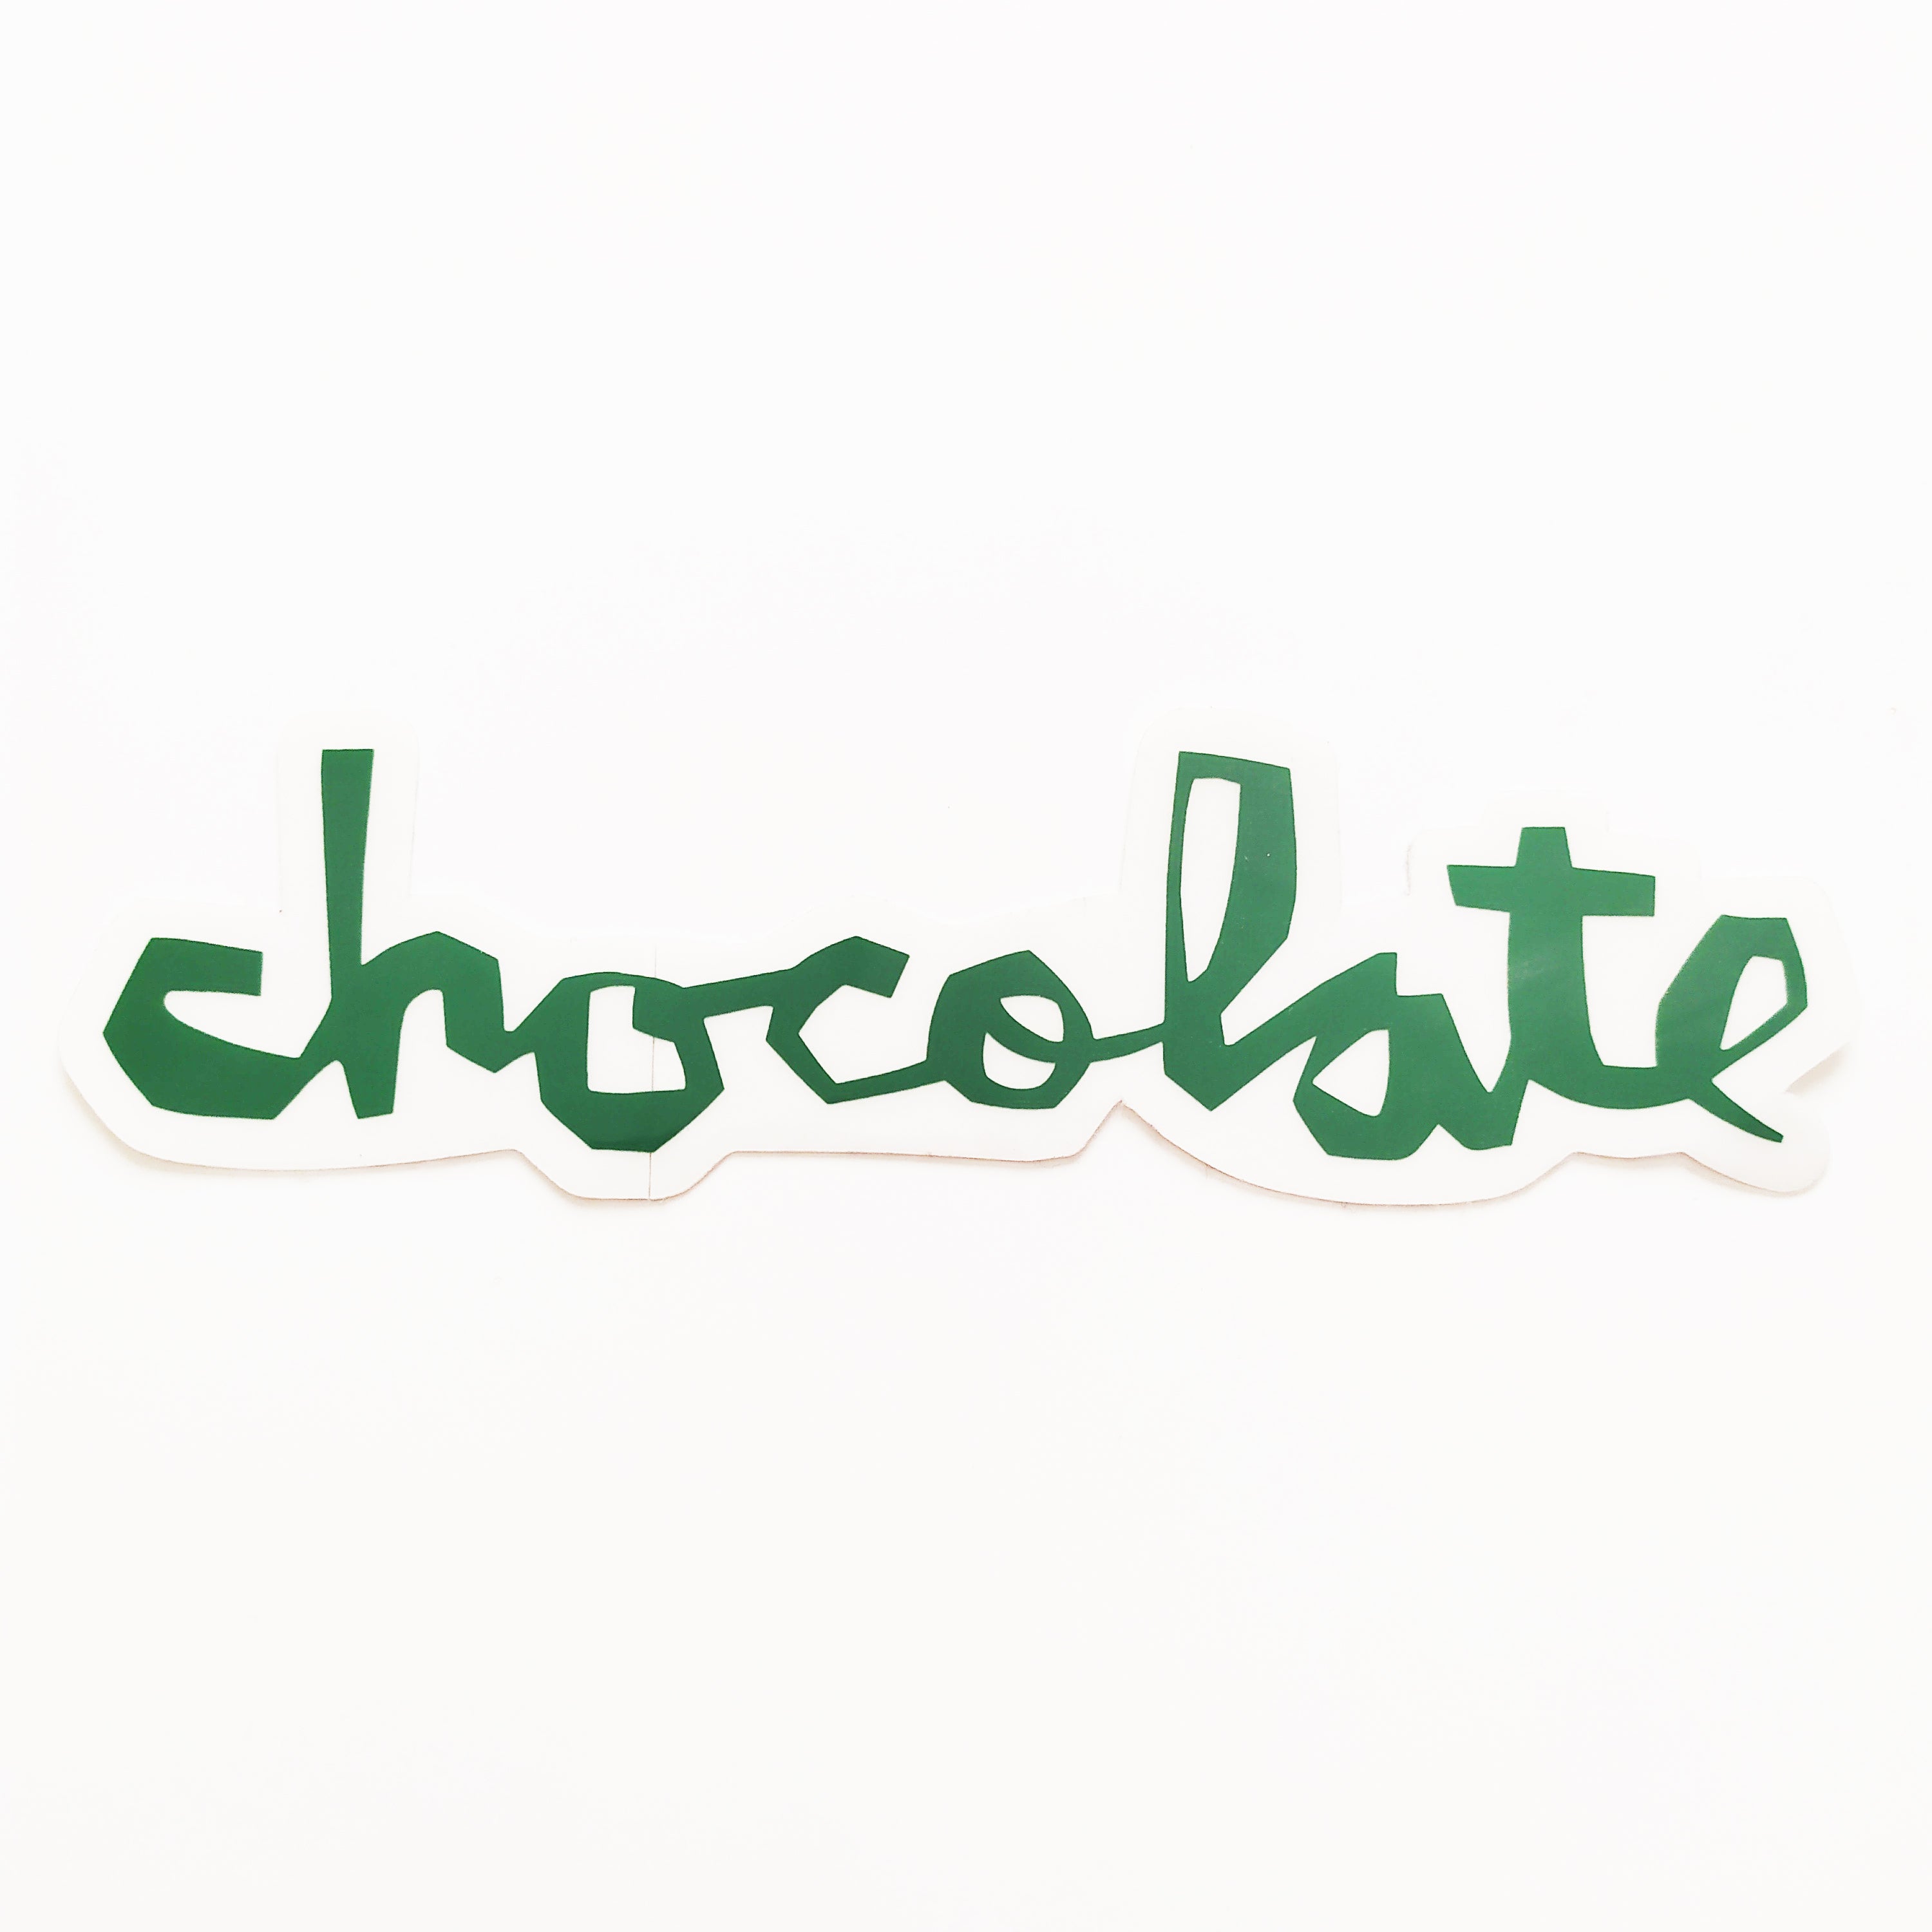 Chocolate Chunk Logo Skateboard Sticker - Dark Green - 8cm across approx - SkateboardStickers.com